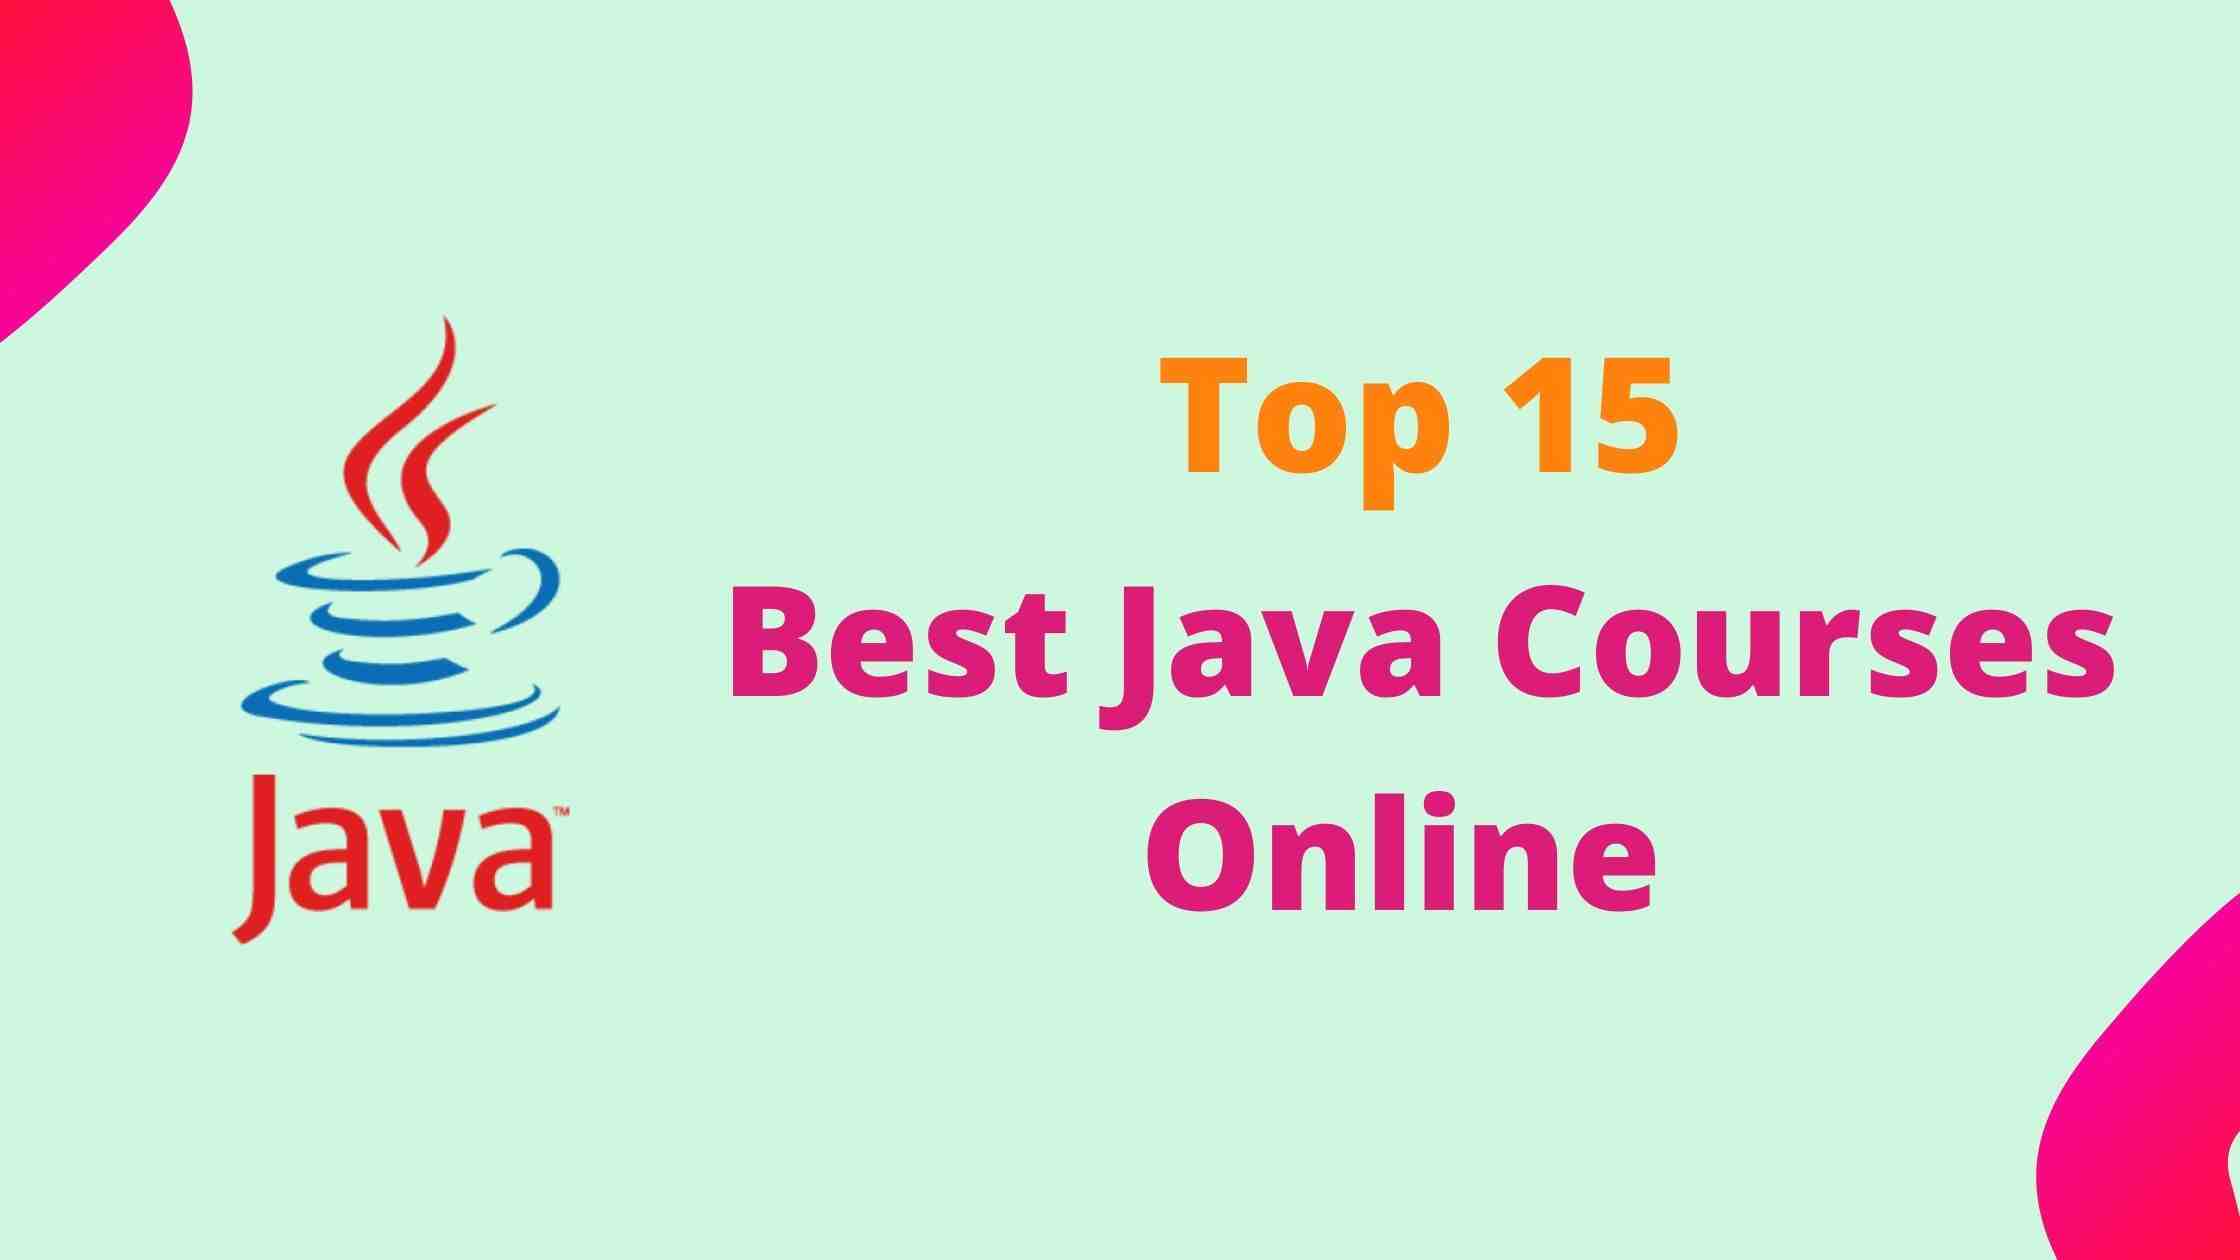 Best Java Courses Online